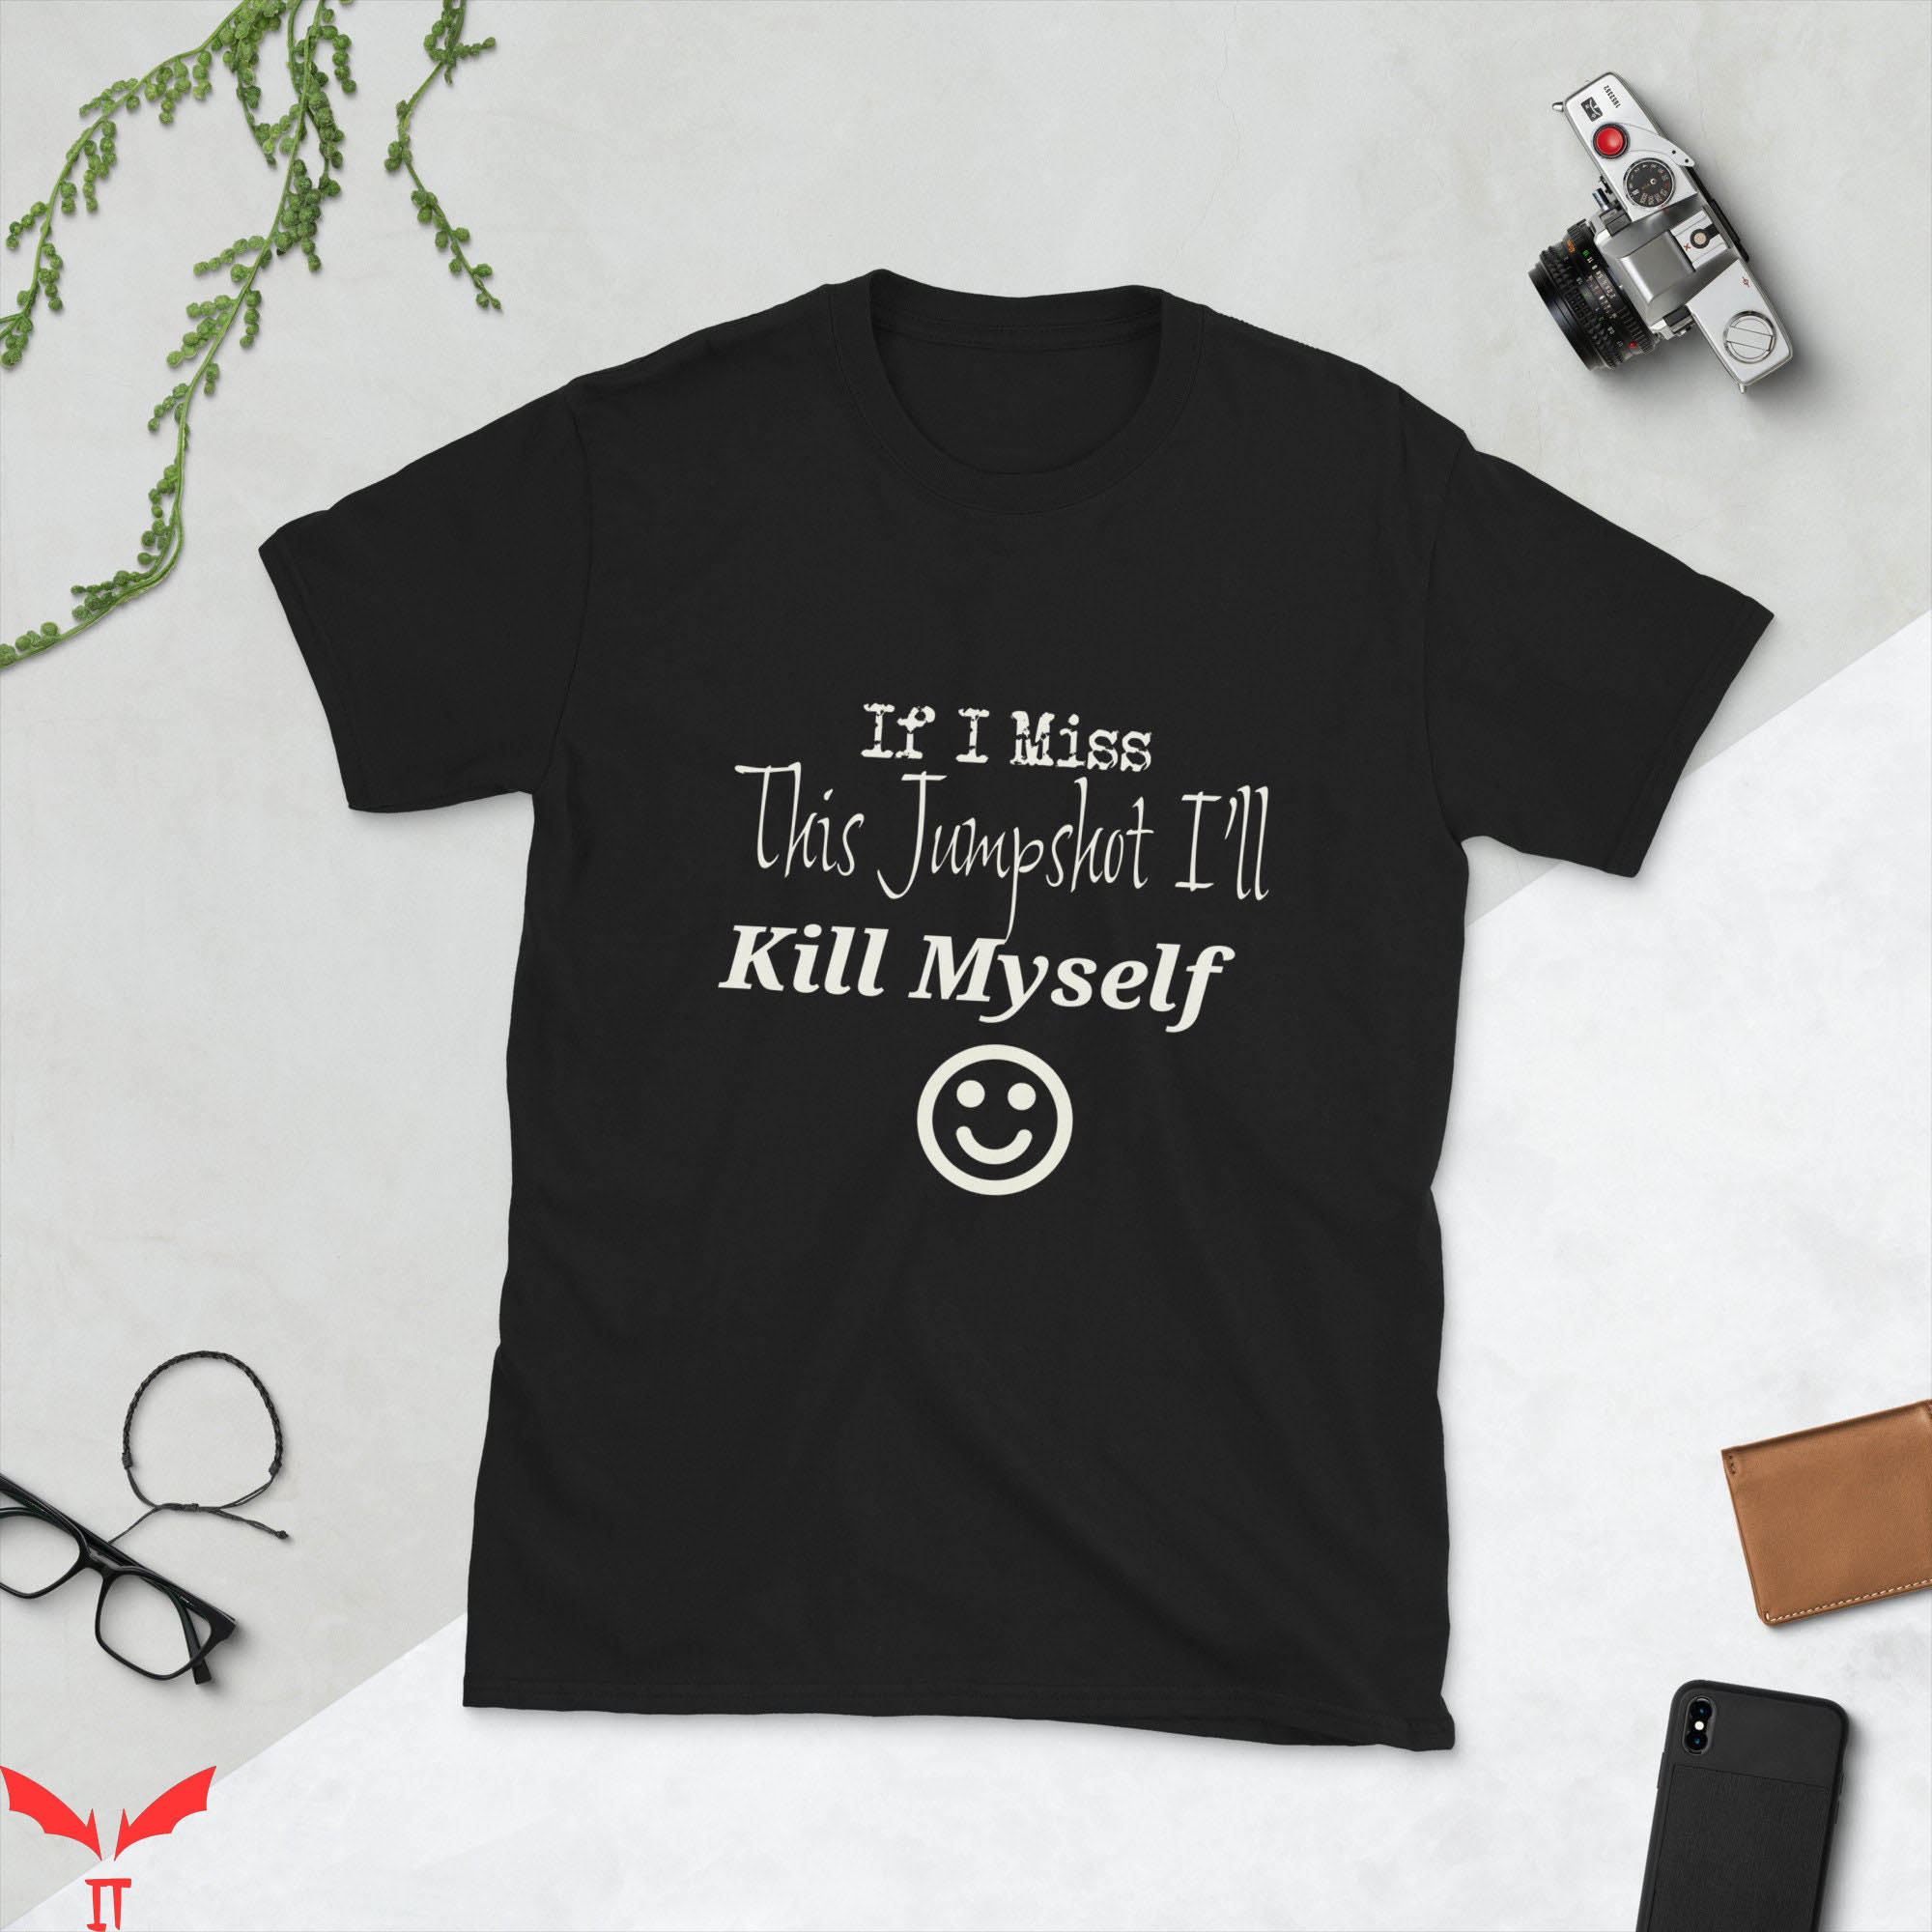 If I Miss This Jumpshot I'll Kill Myself T-Shirt Cool Design